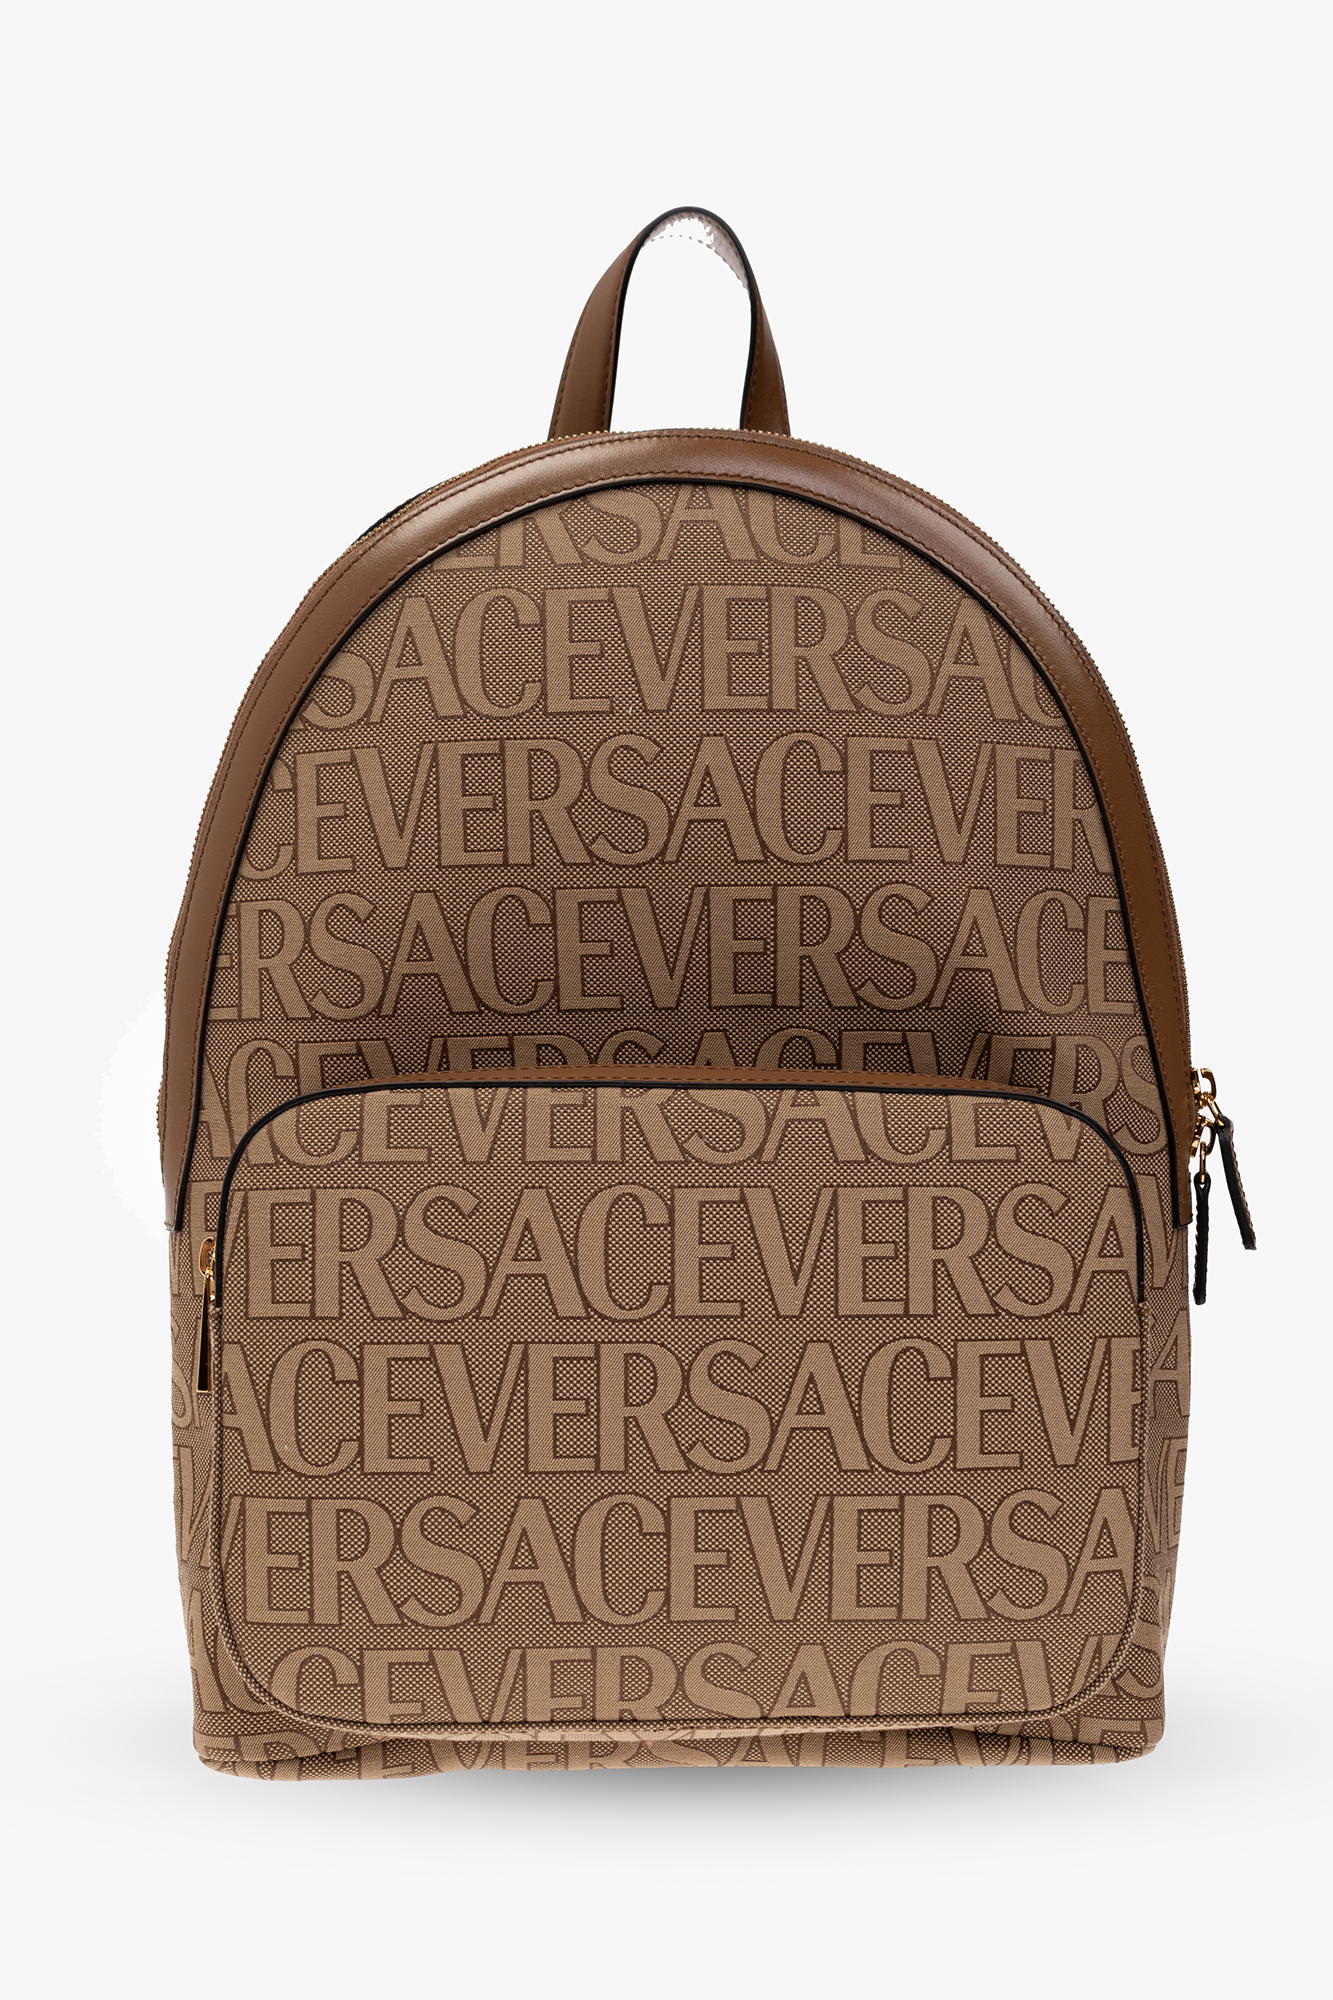 Versace Vangarde Roll-Top Backpack